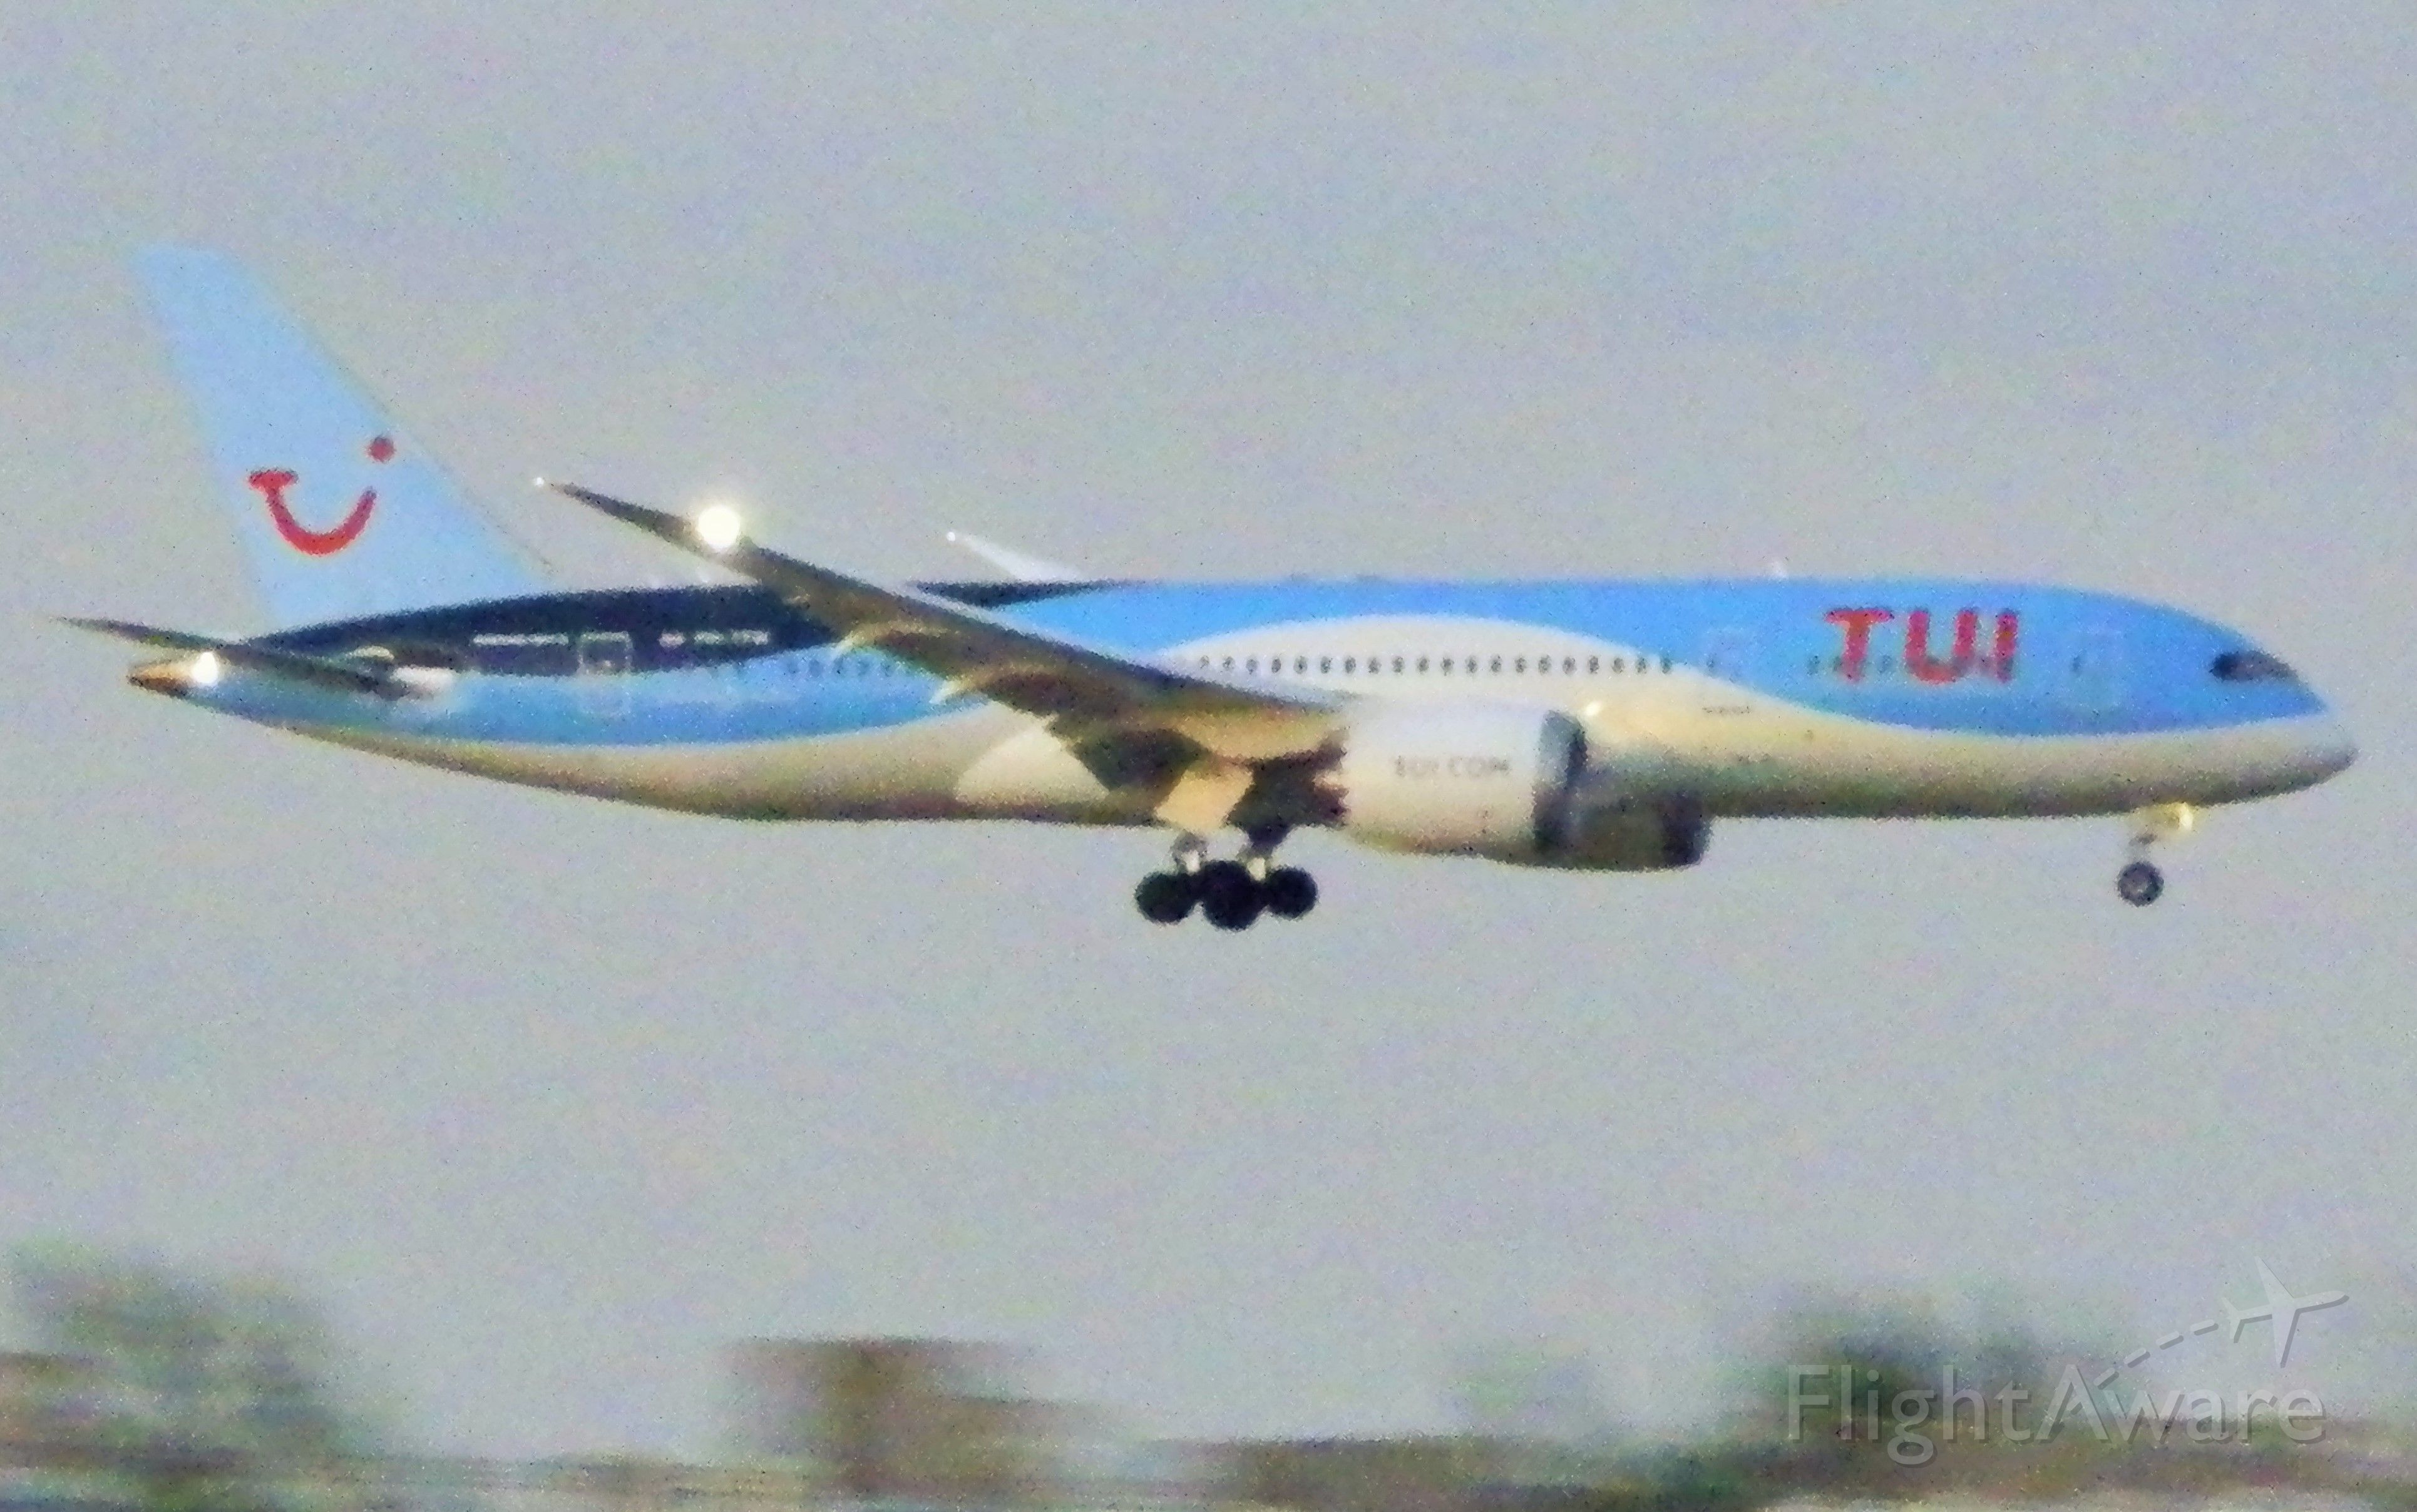 Boeing 787-8 (PH-TFM)